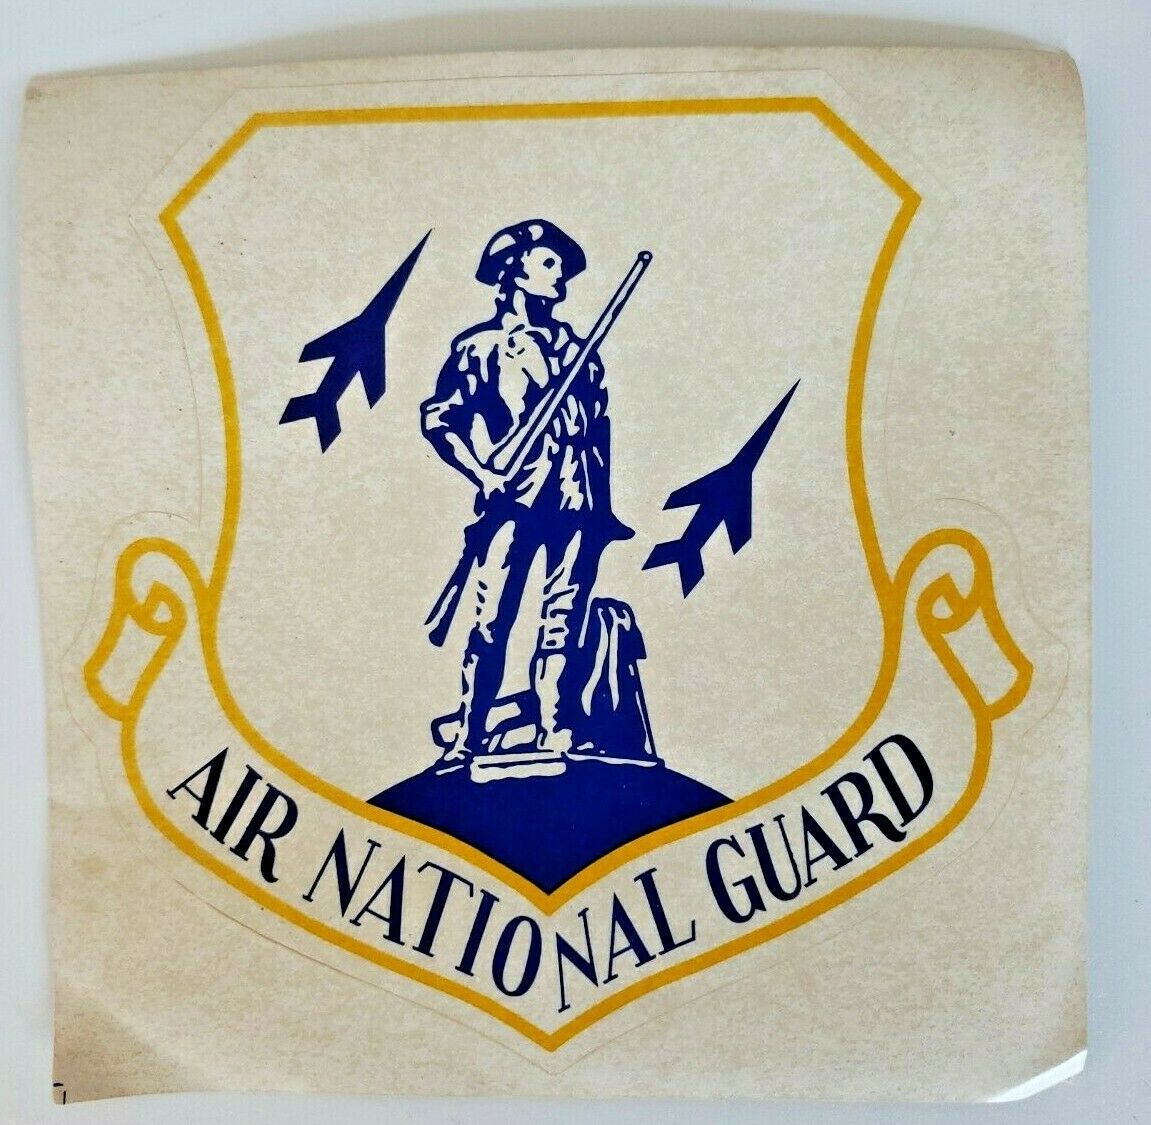 Vintage Air National Guard Original Decal 5.25" x 5.25" PB156 - $9.99